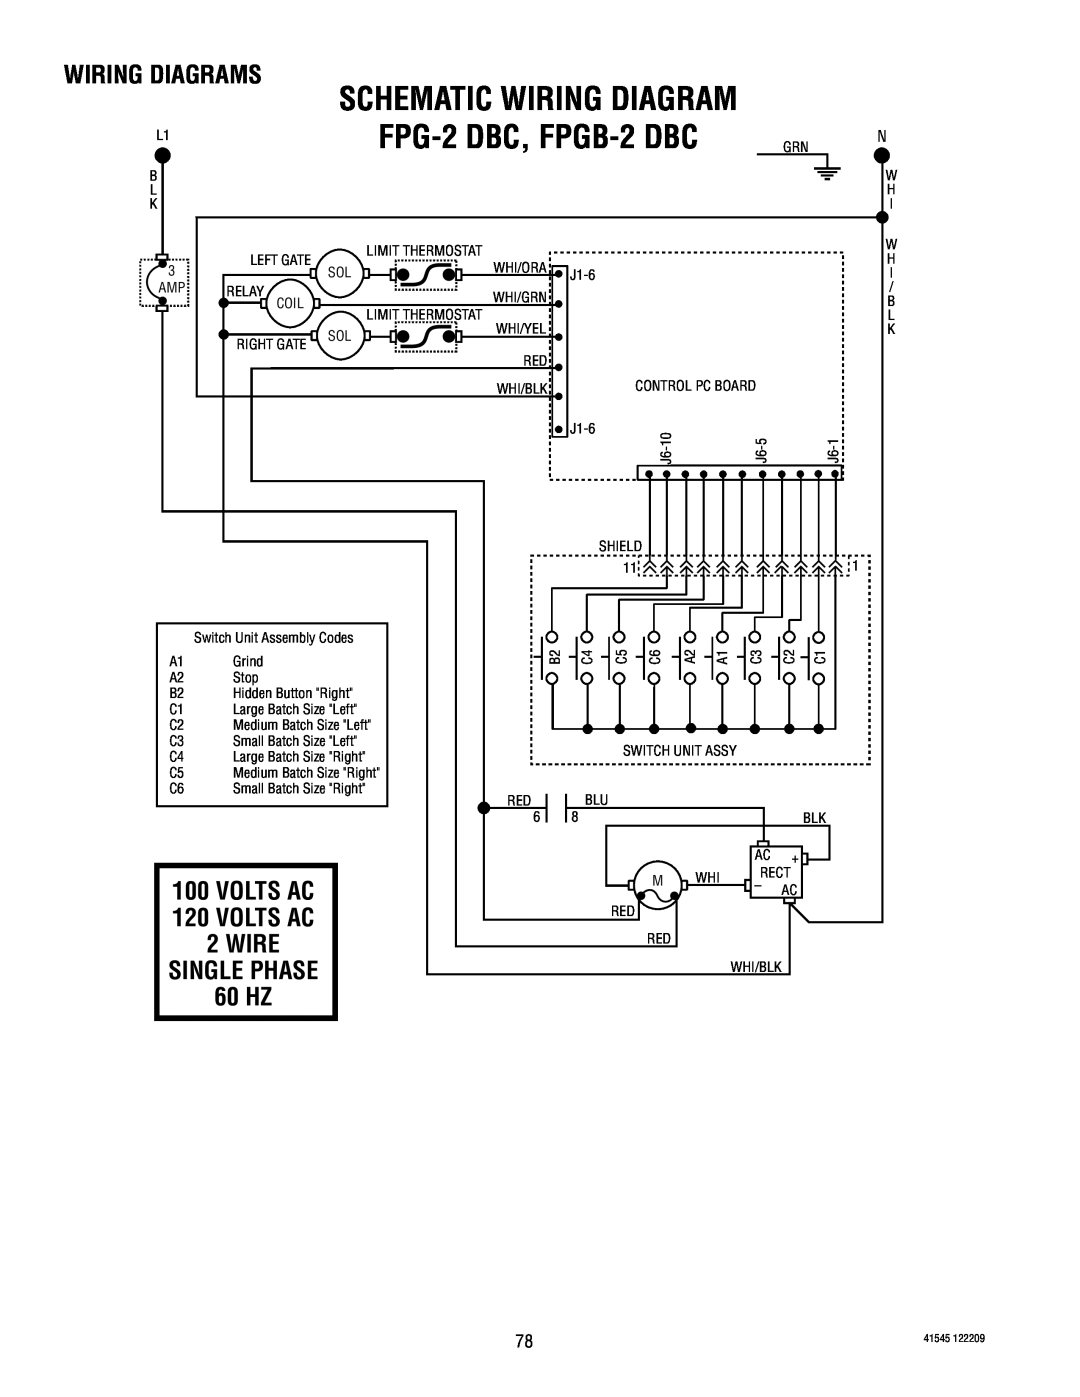 Bunn G1 FPG-2 DBC, FPGB-2 DBC, VOLTS AC 120 VOLTS AC 2 WIRE SINGLE PHASE 60 HZ, Wiring Diagrams, Schematic Wiring Diagram 